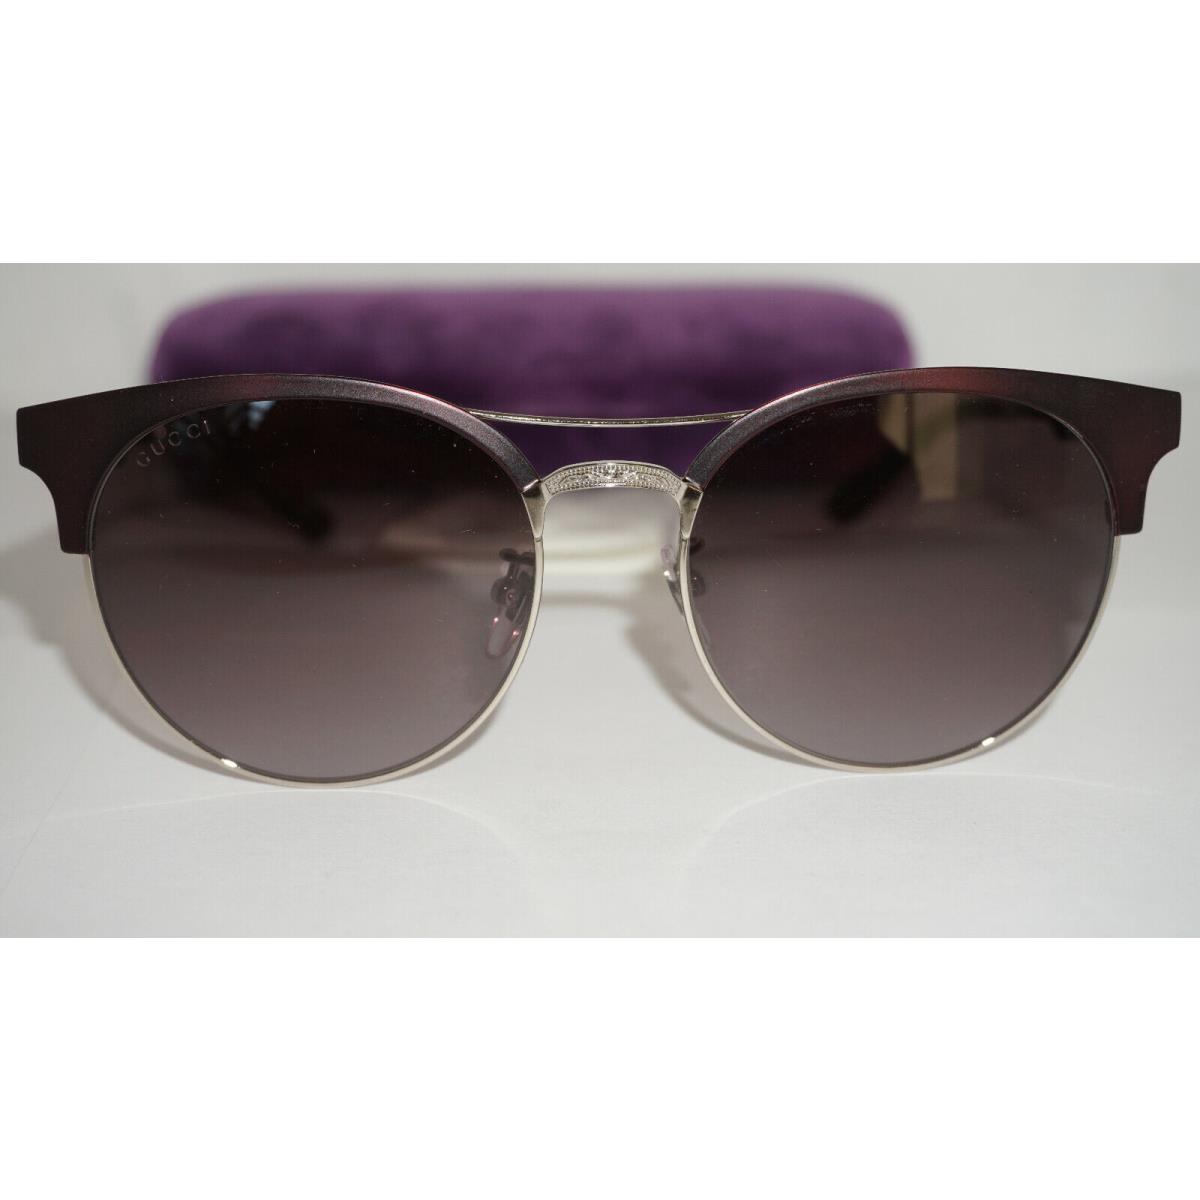 Gucci sunglasses  - Burgundy Palladium , Burgundy Palladium Frame, Grey Gradient Lens 0